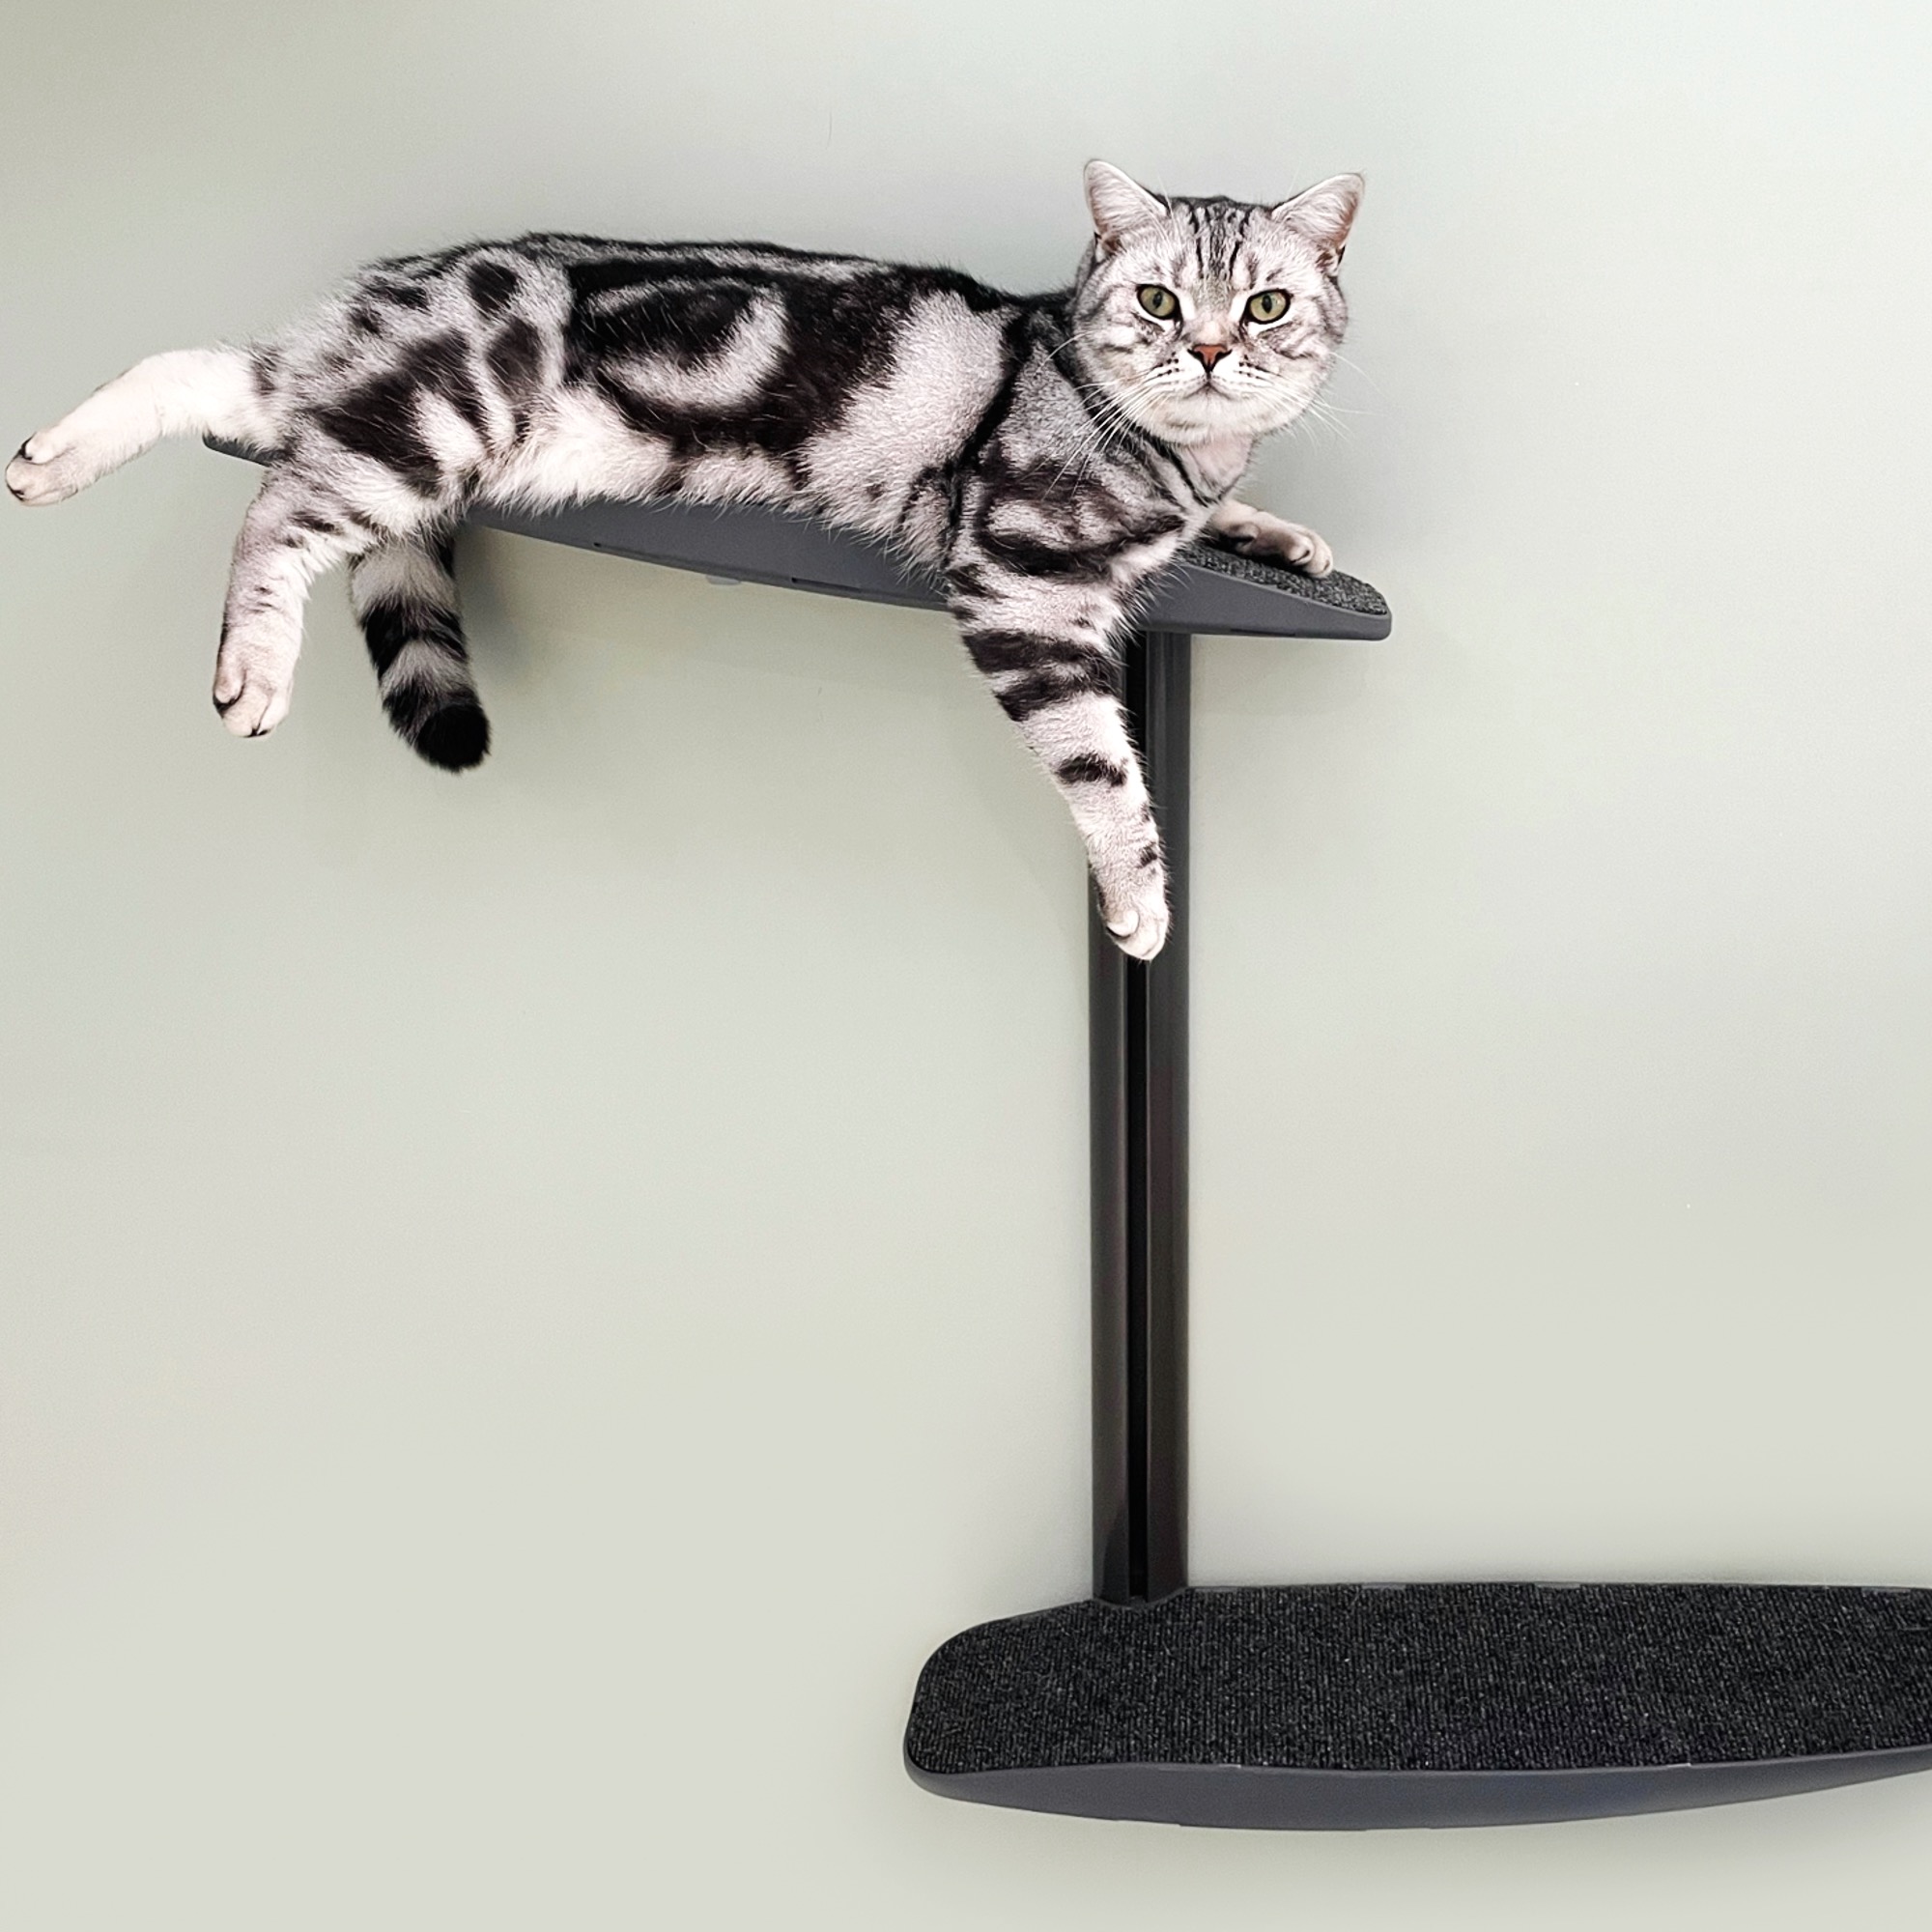 De todos modos Pantano Miau miau Catipilla Mini | Compact, Wall-Mounted Cat Climber